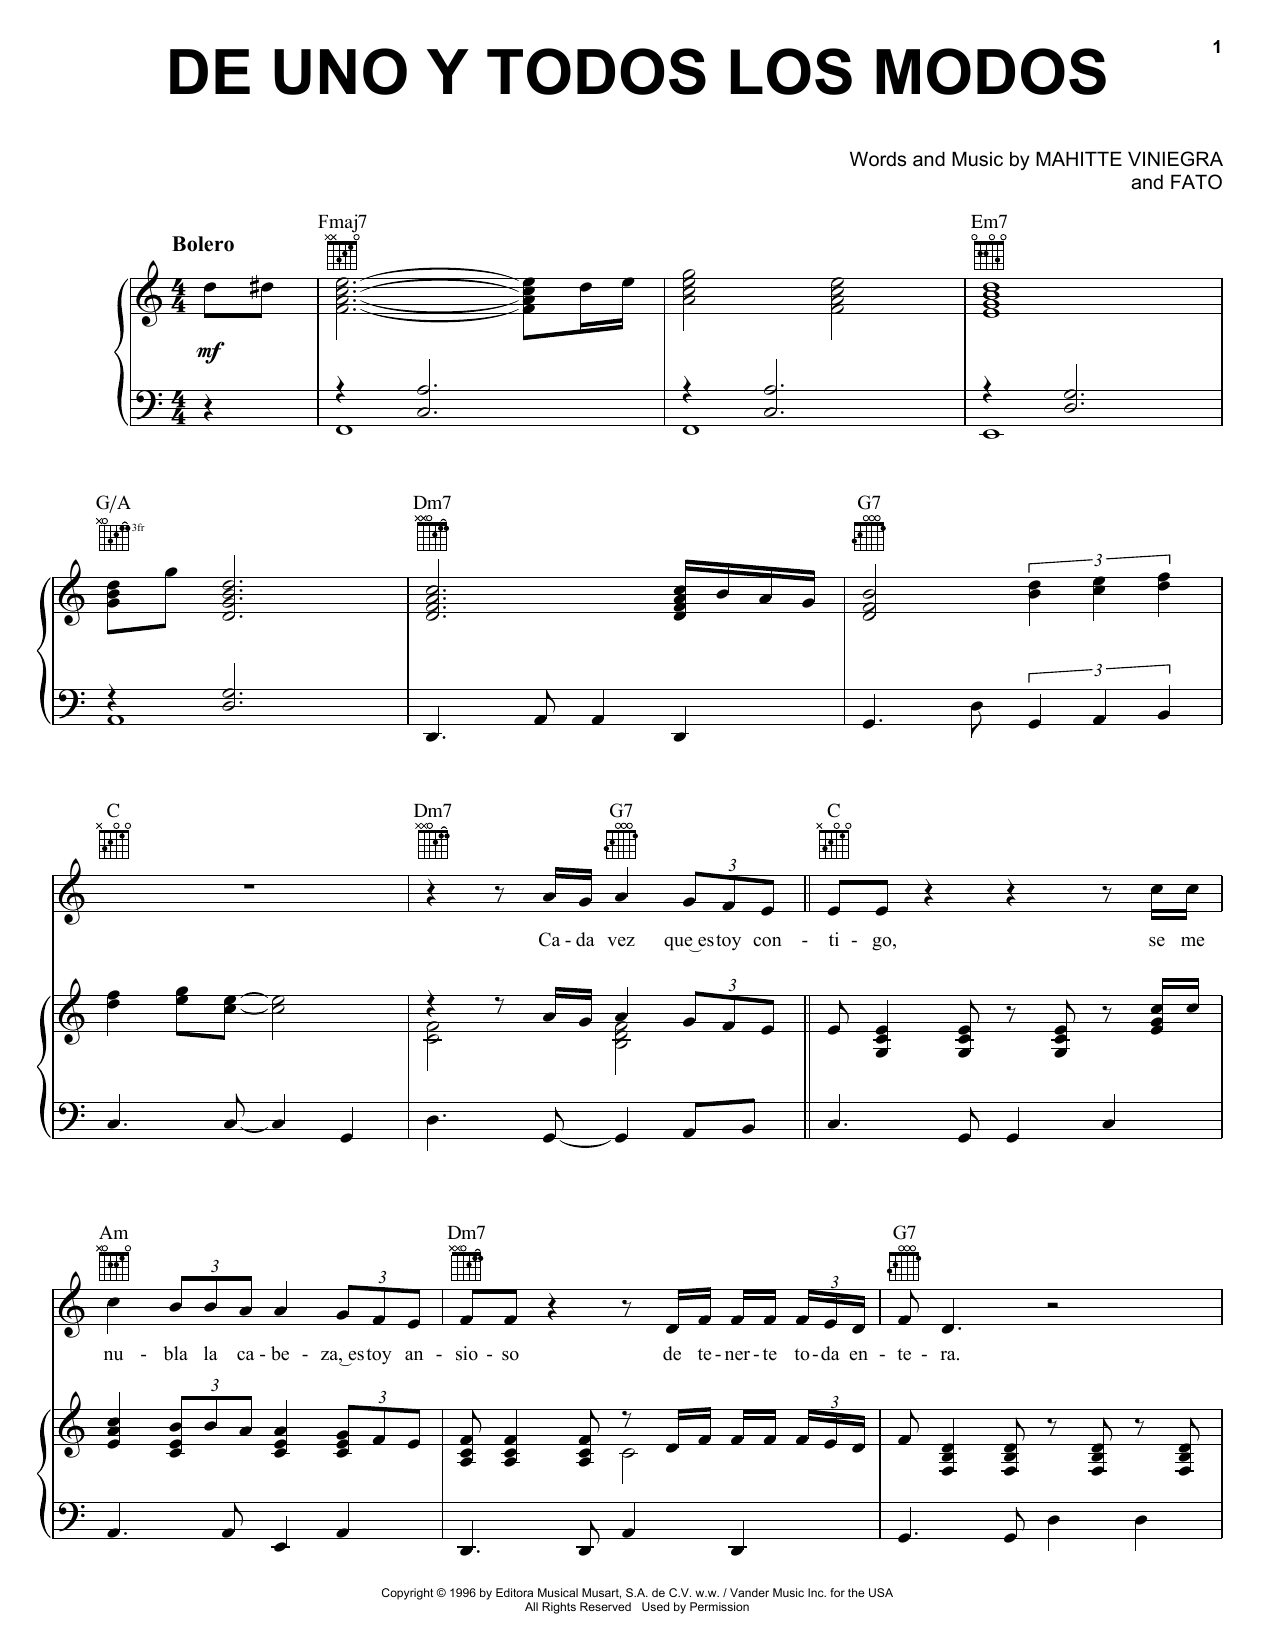 FATO De Uno Y Todos Los Modos Sheet Music Notes & Chords for Piano, Vocal & Guitar (Right-Hand Melody) - Download or Print PDF